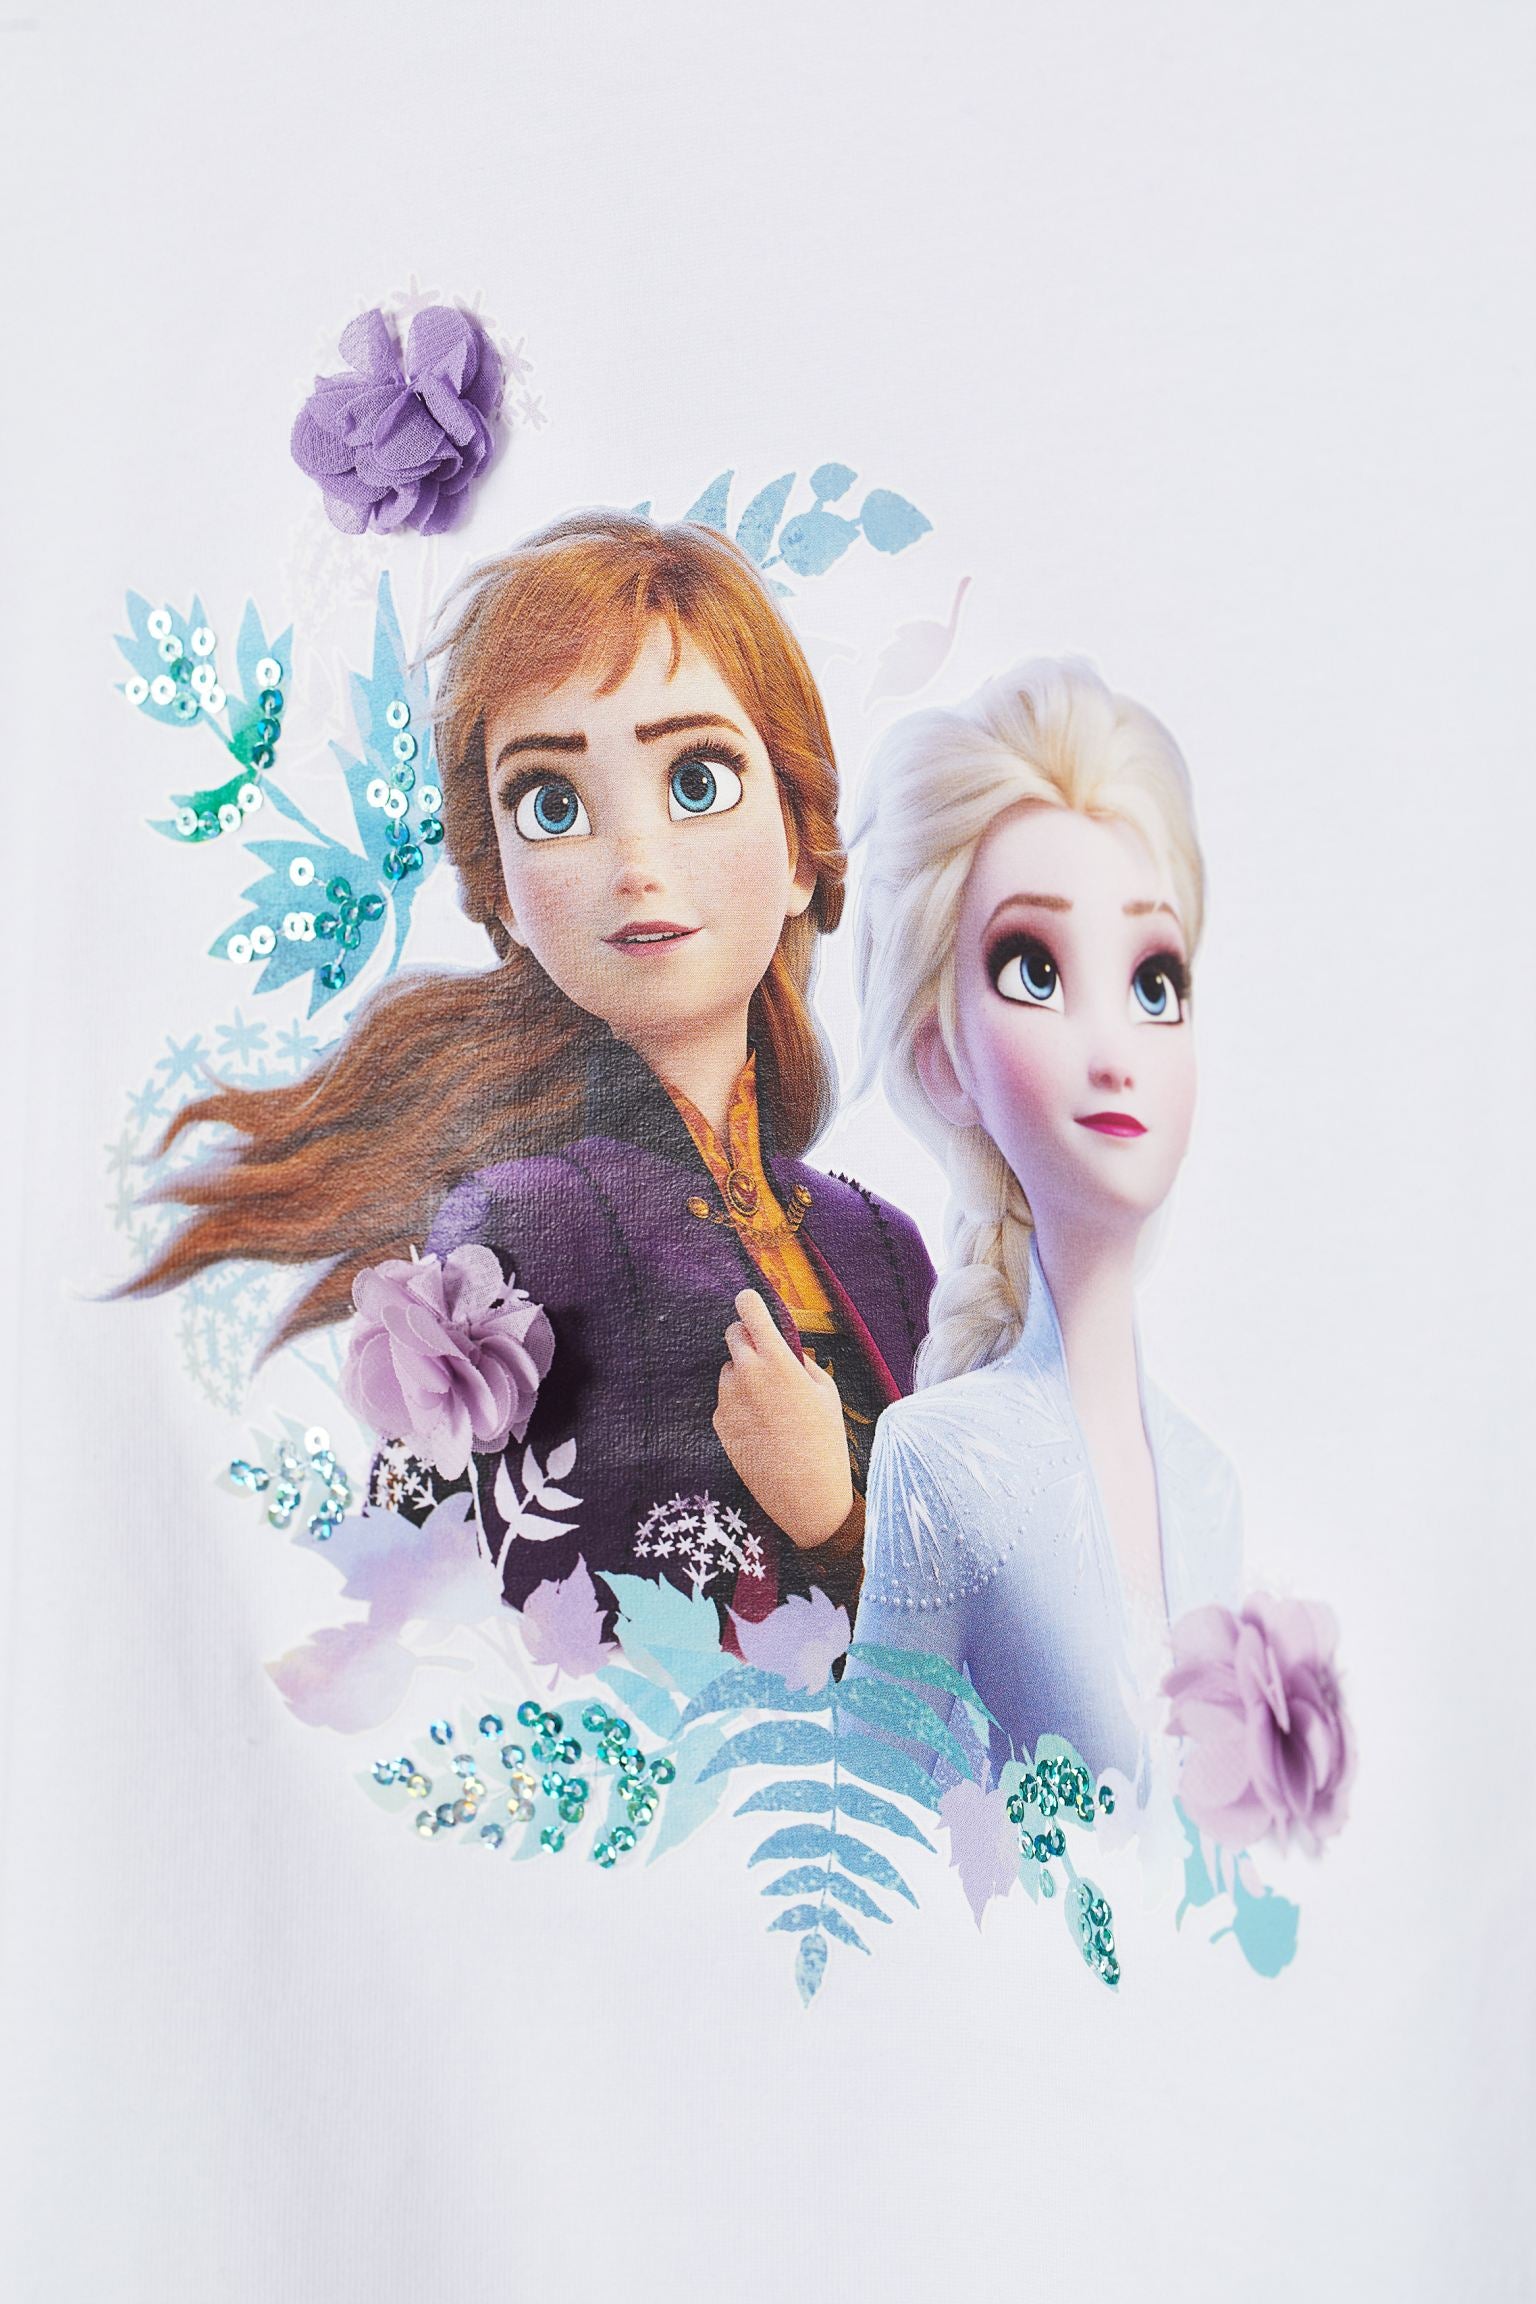 T-shirt -Frozen theme